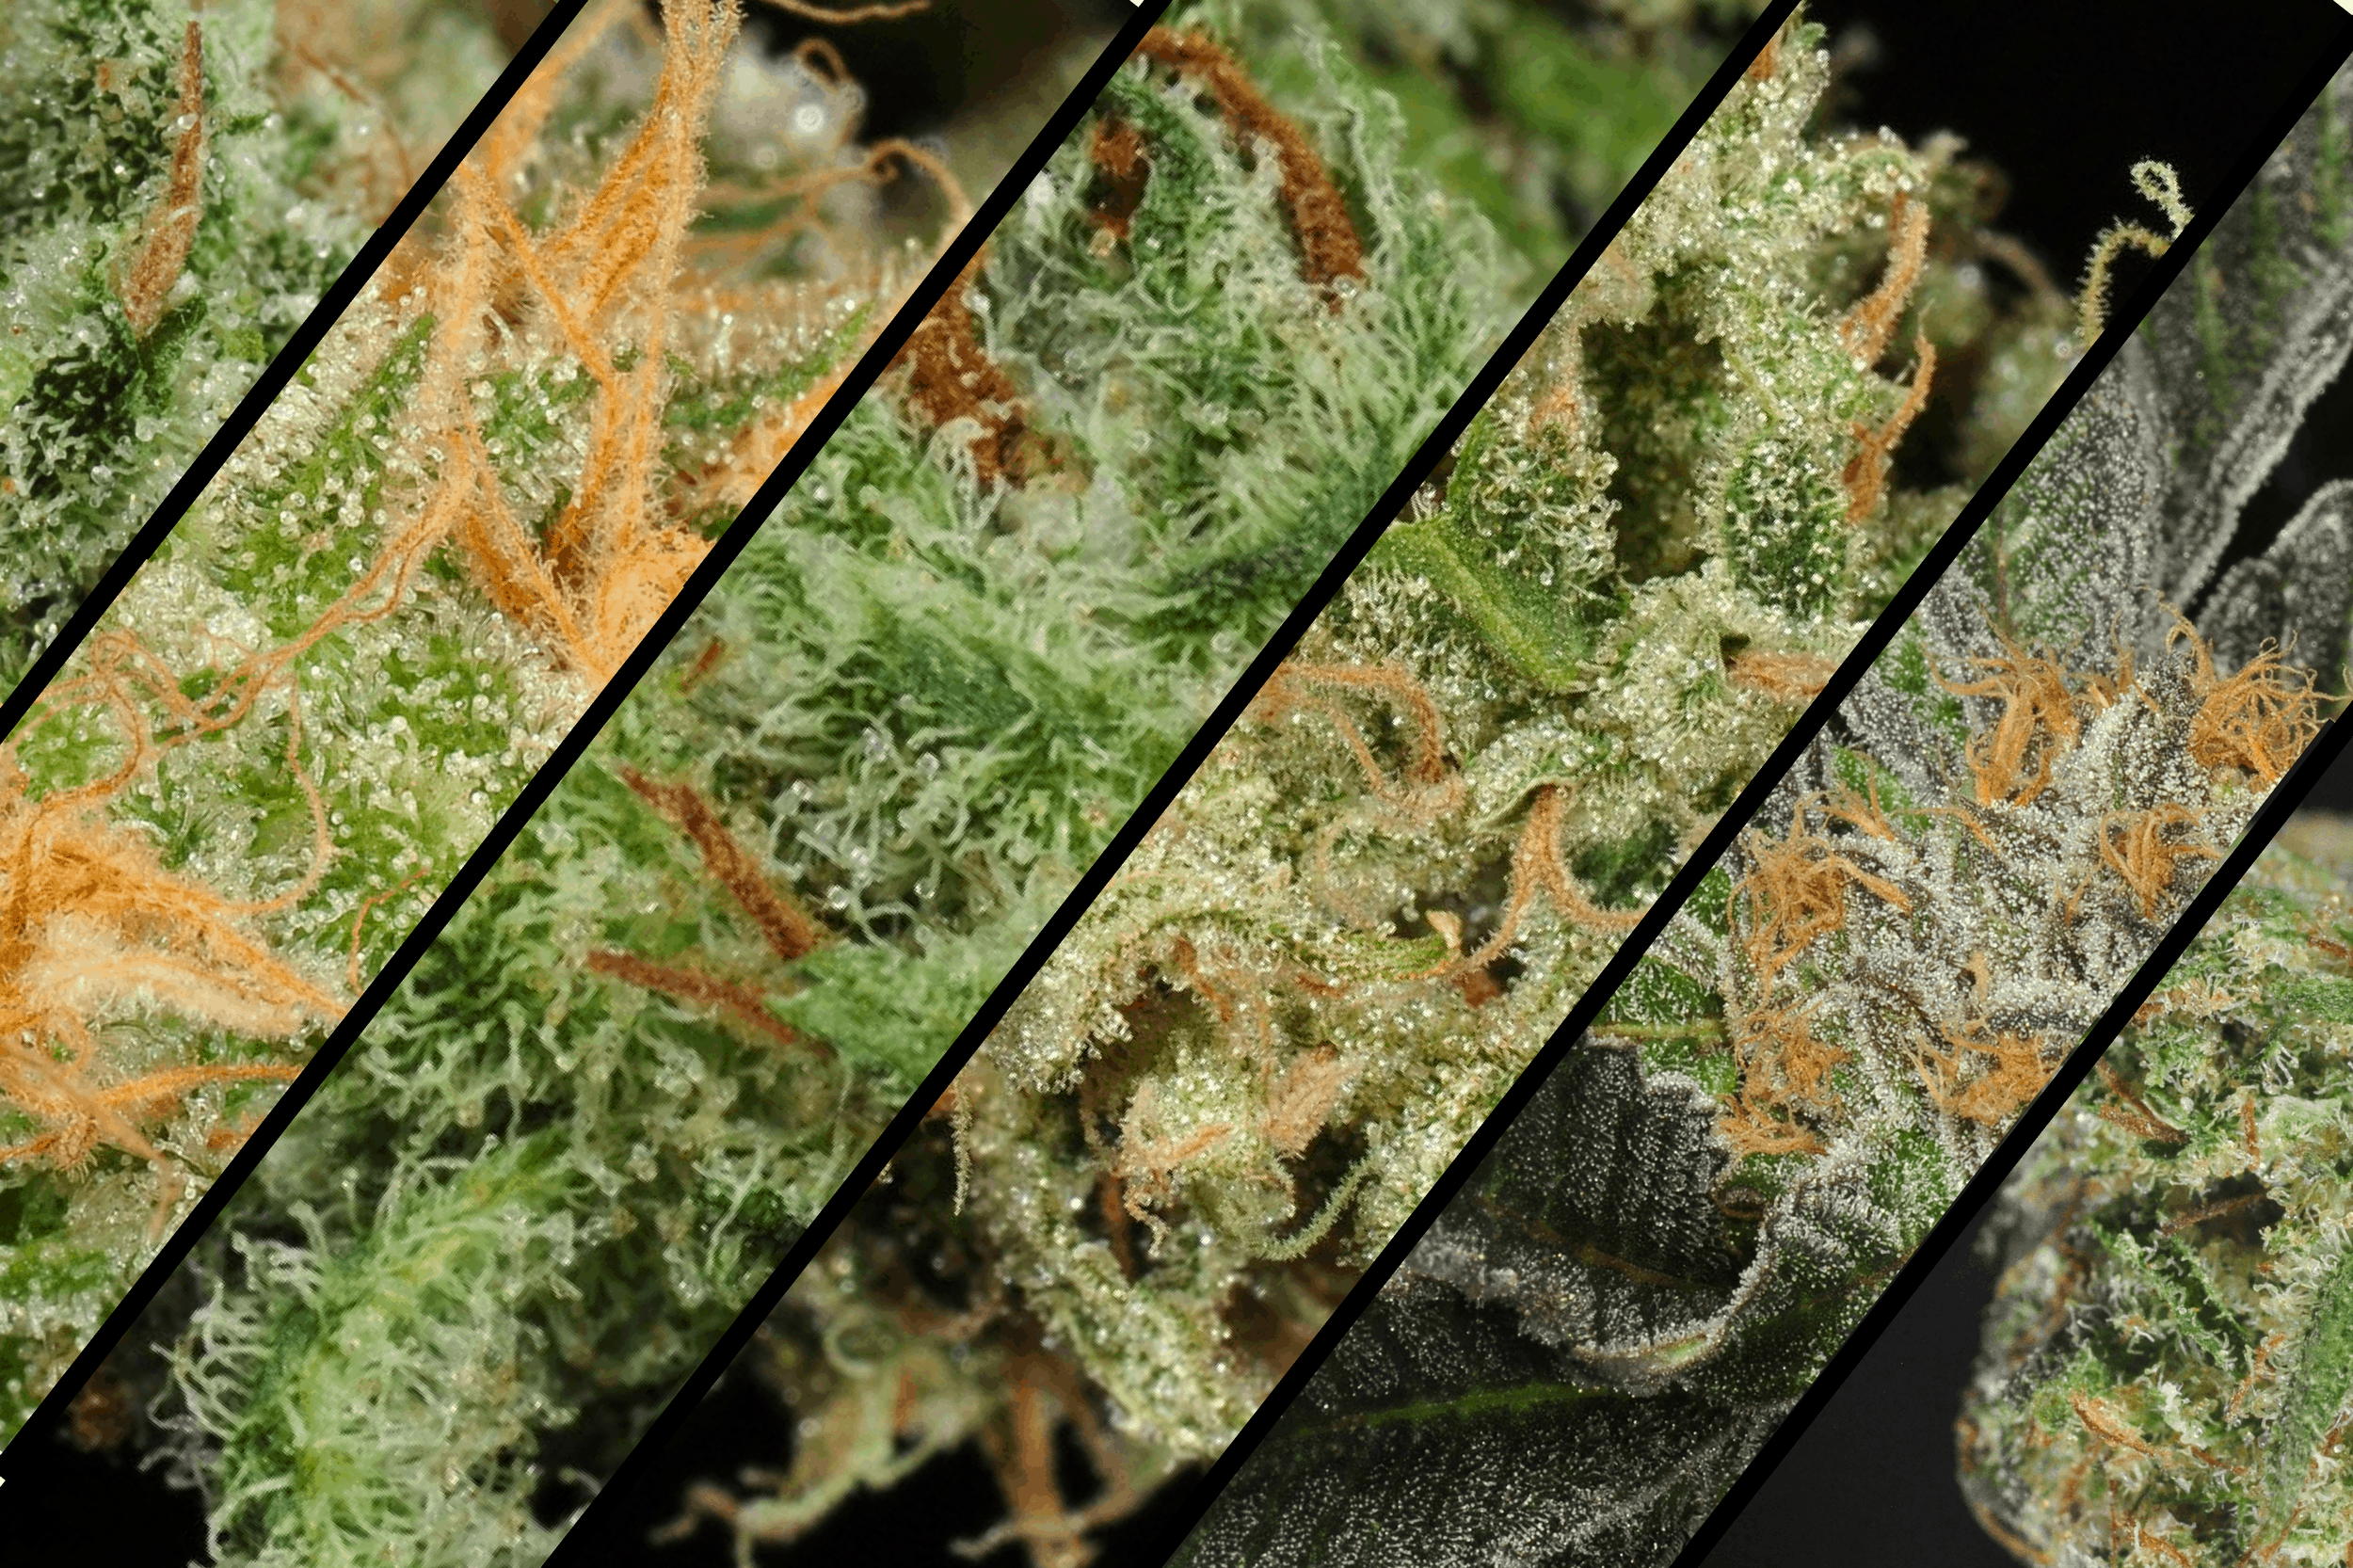 The Many Different Types of Medical Marijuana Plants